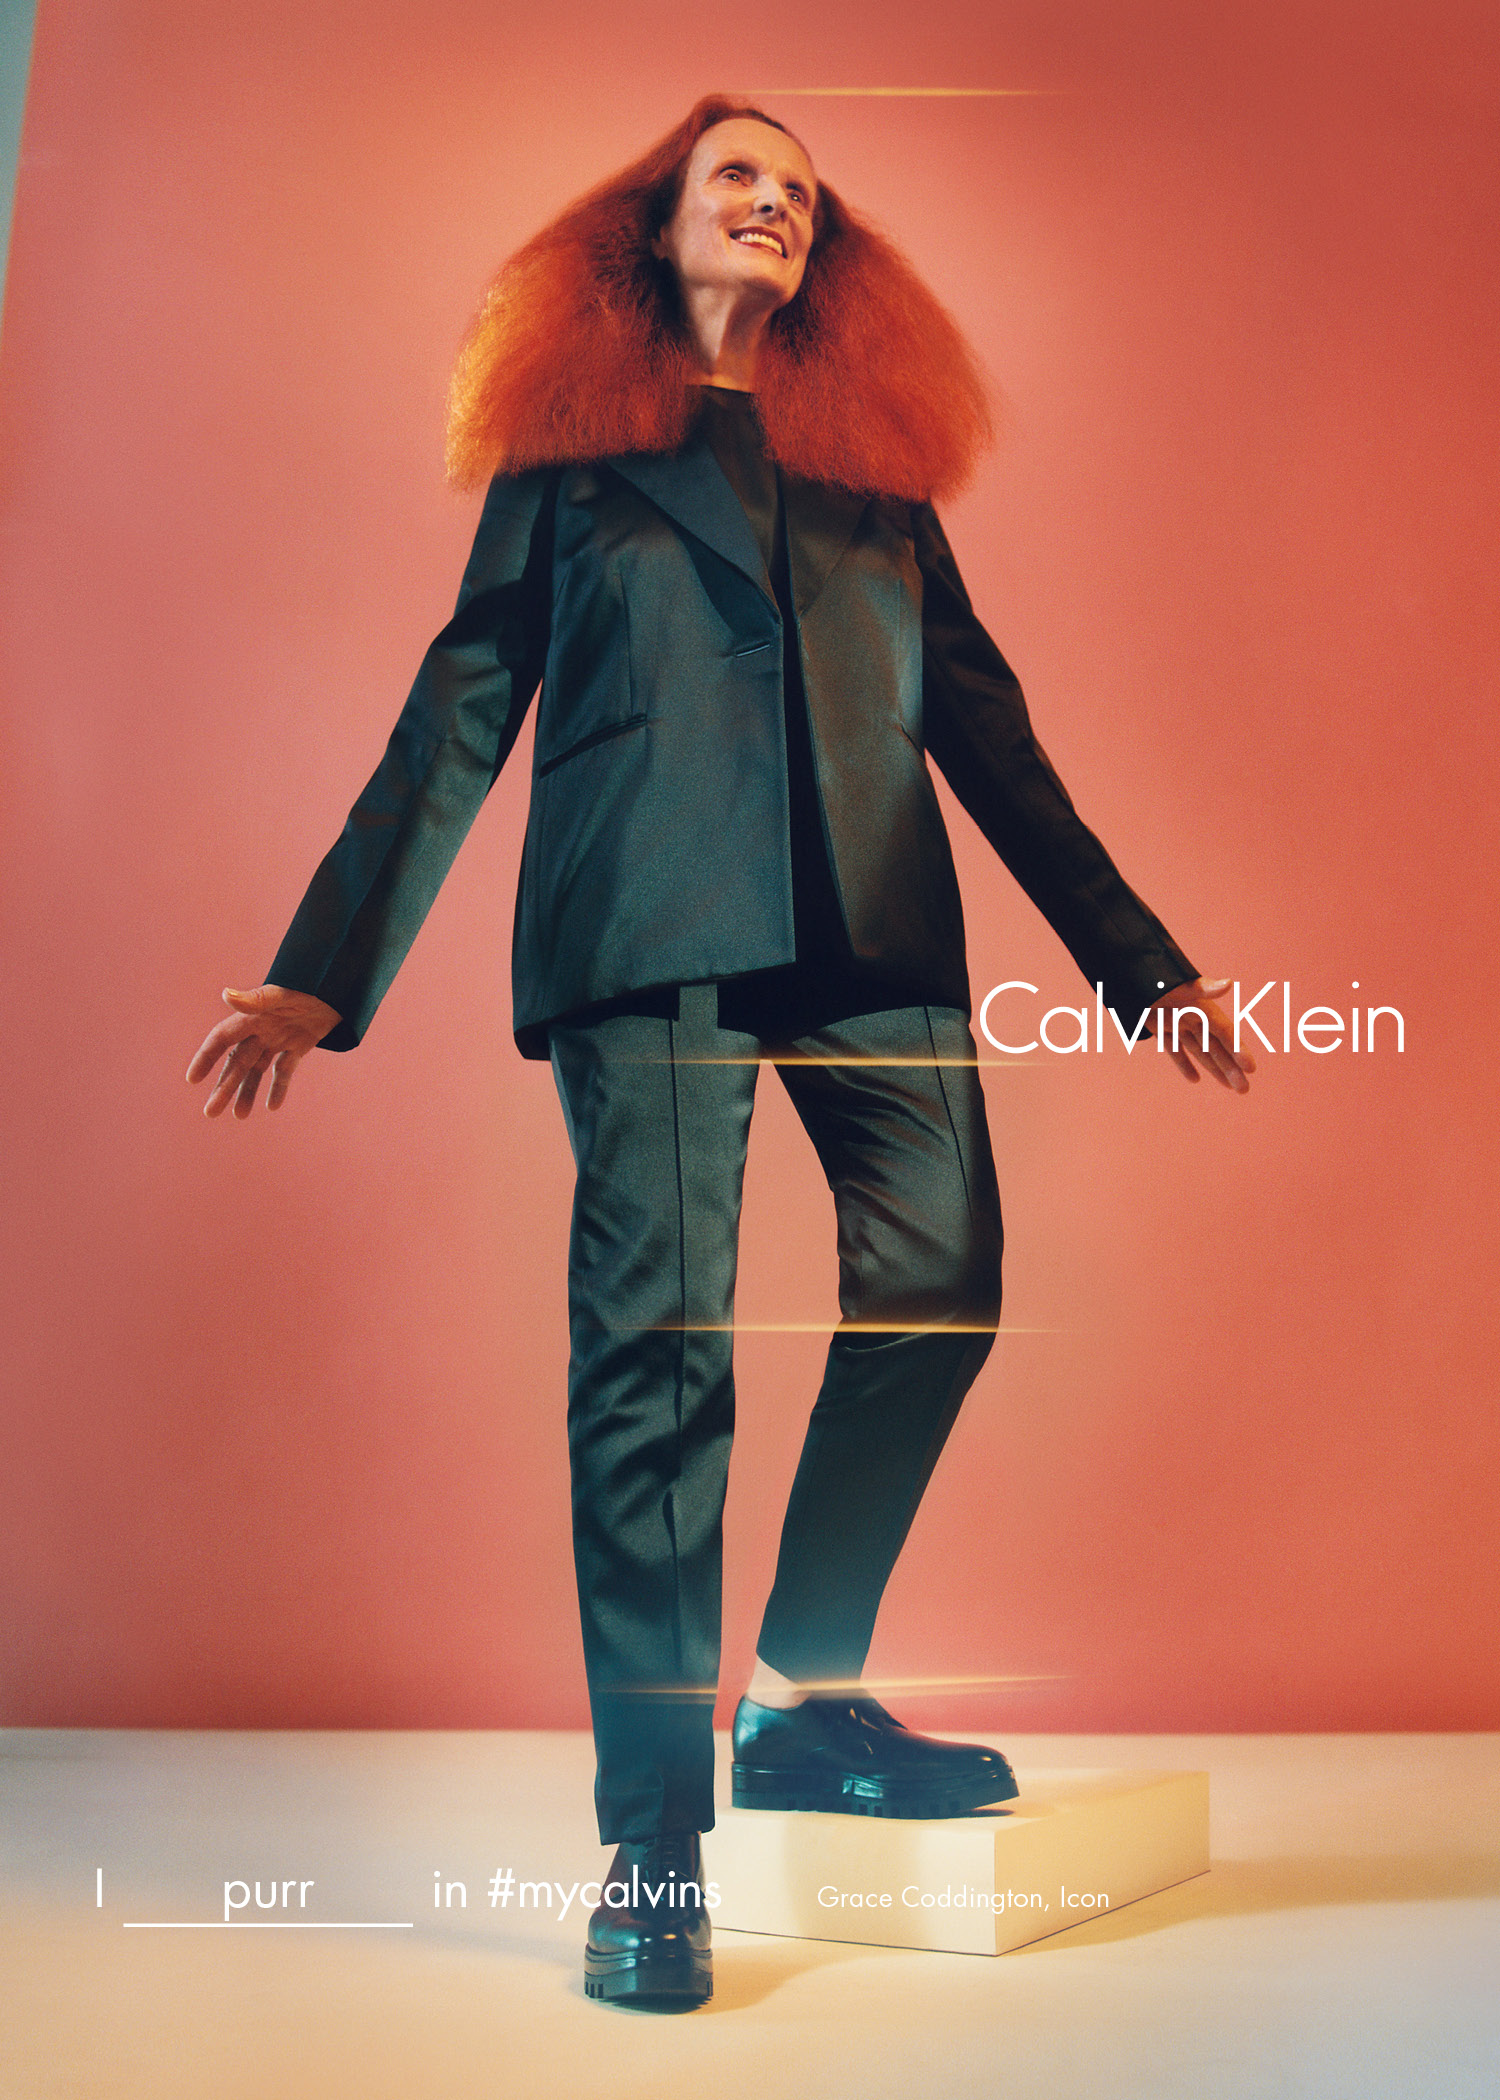 Calvin Klein Fall 2009 Global Ad Campaign: How Hot Can You Get? –  FashionWindows Network